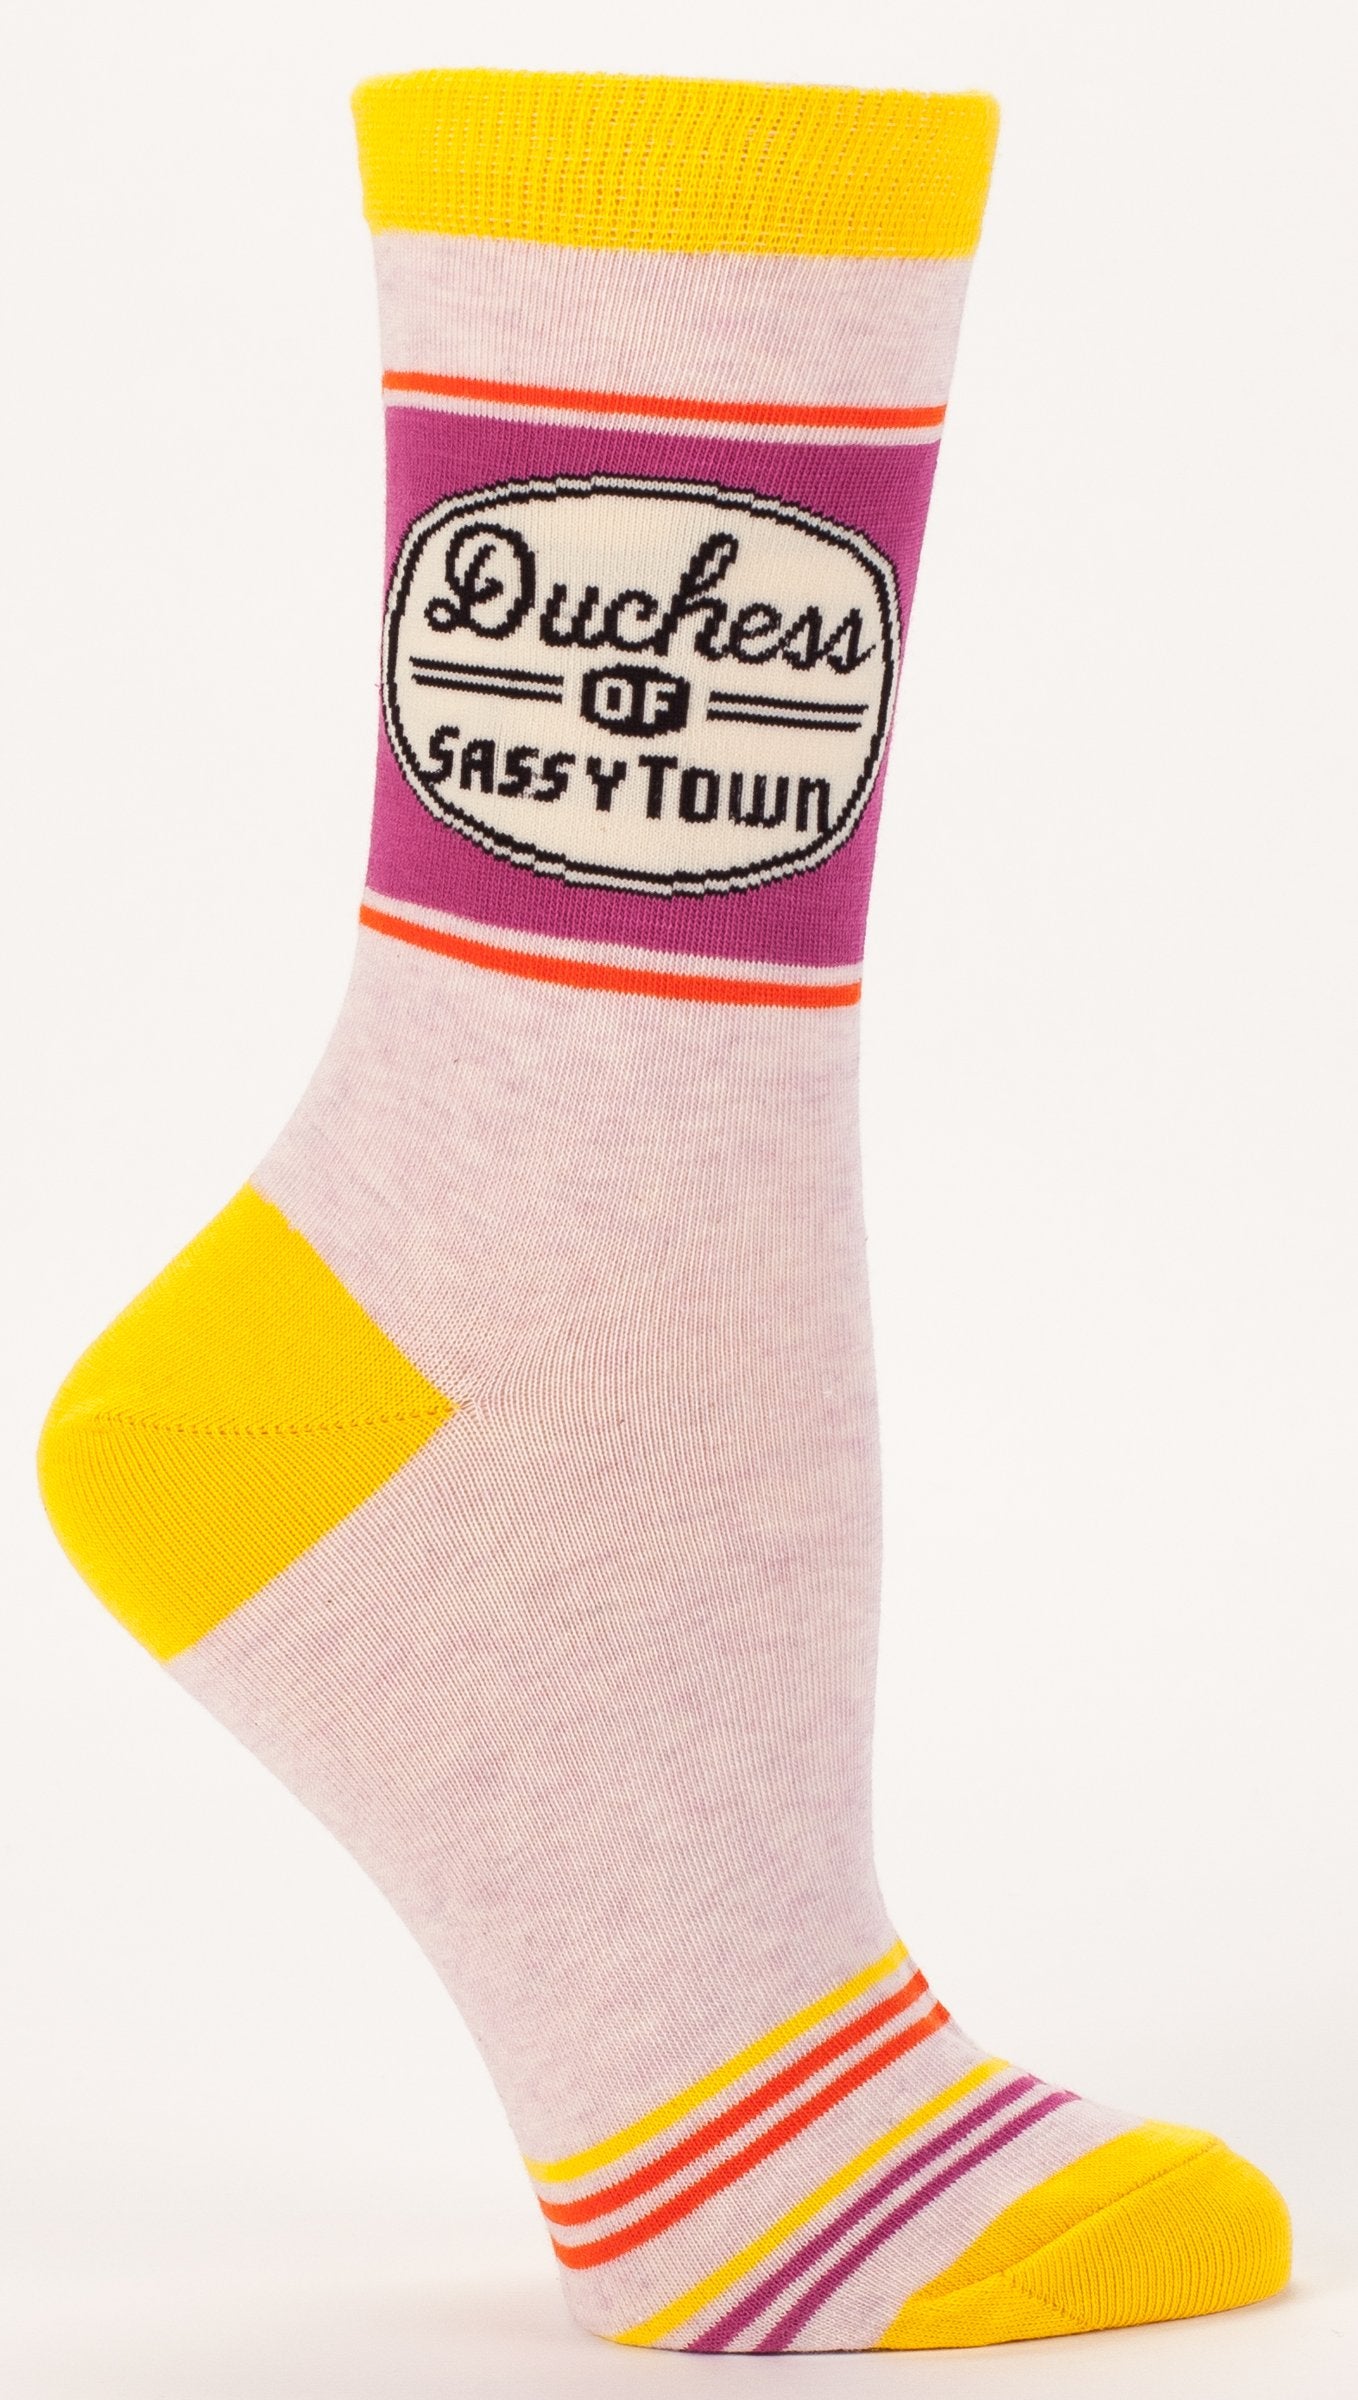 Blue Q - Women's Crew Socks - Duchess of Sassytown